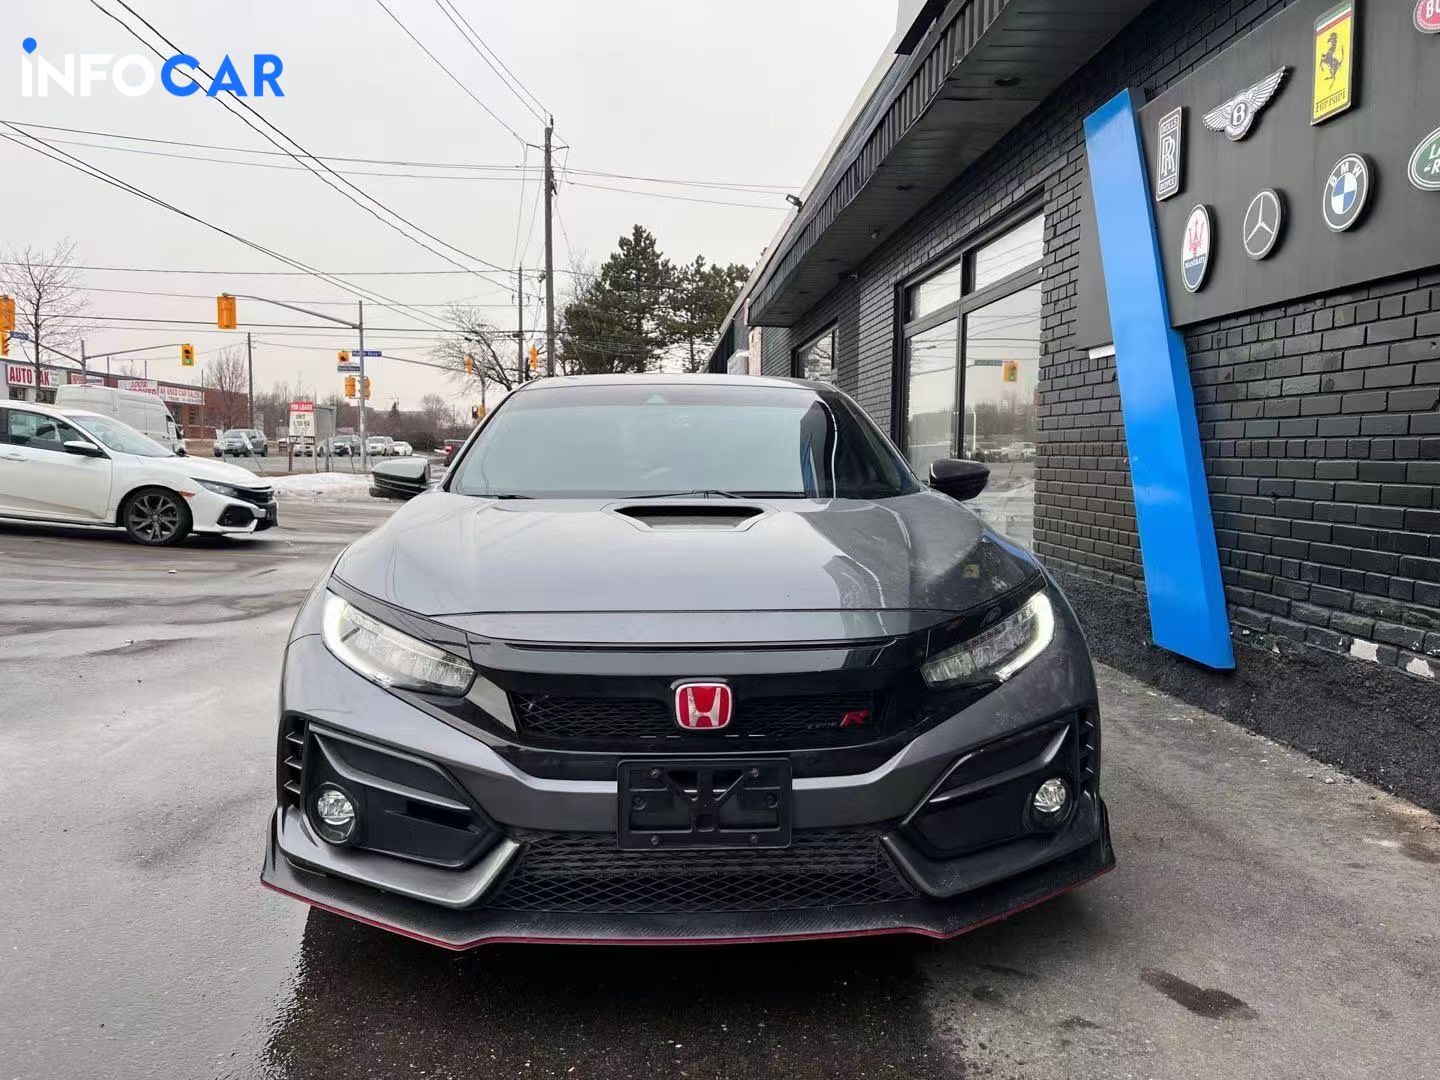 2021 Honda Civic Type R - INFOCAR - Toronto Auto Trading Platform